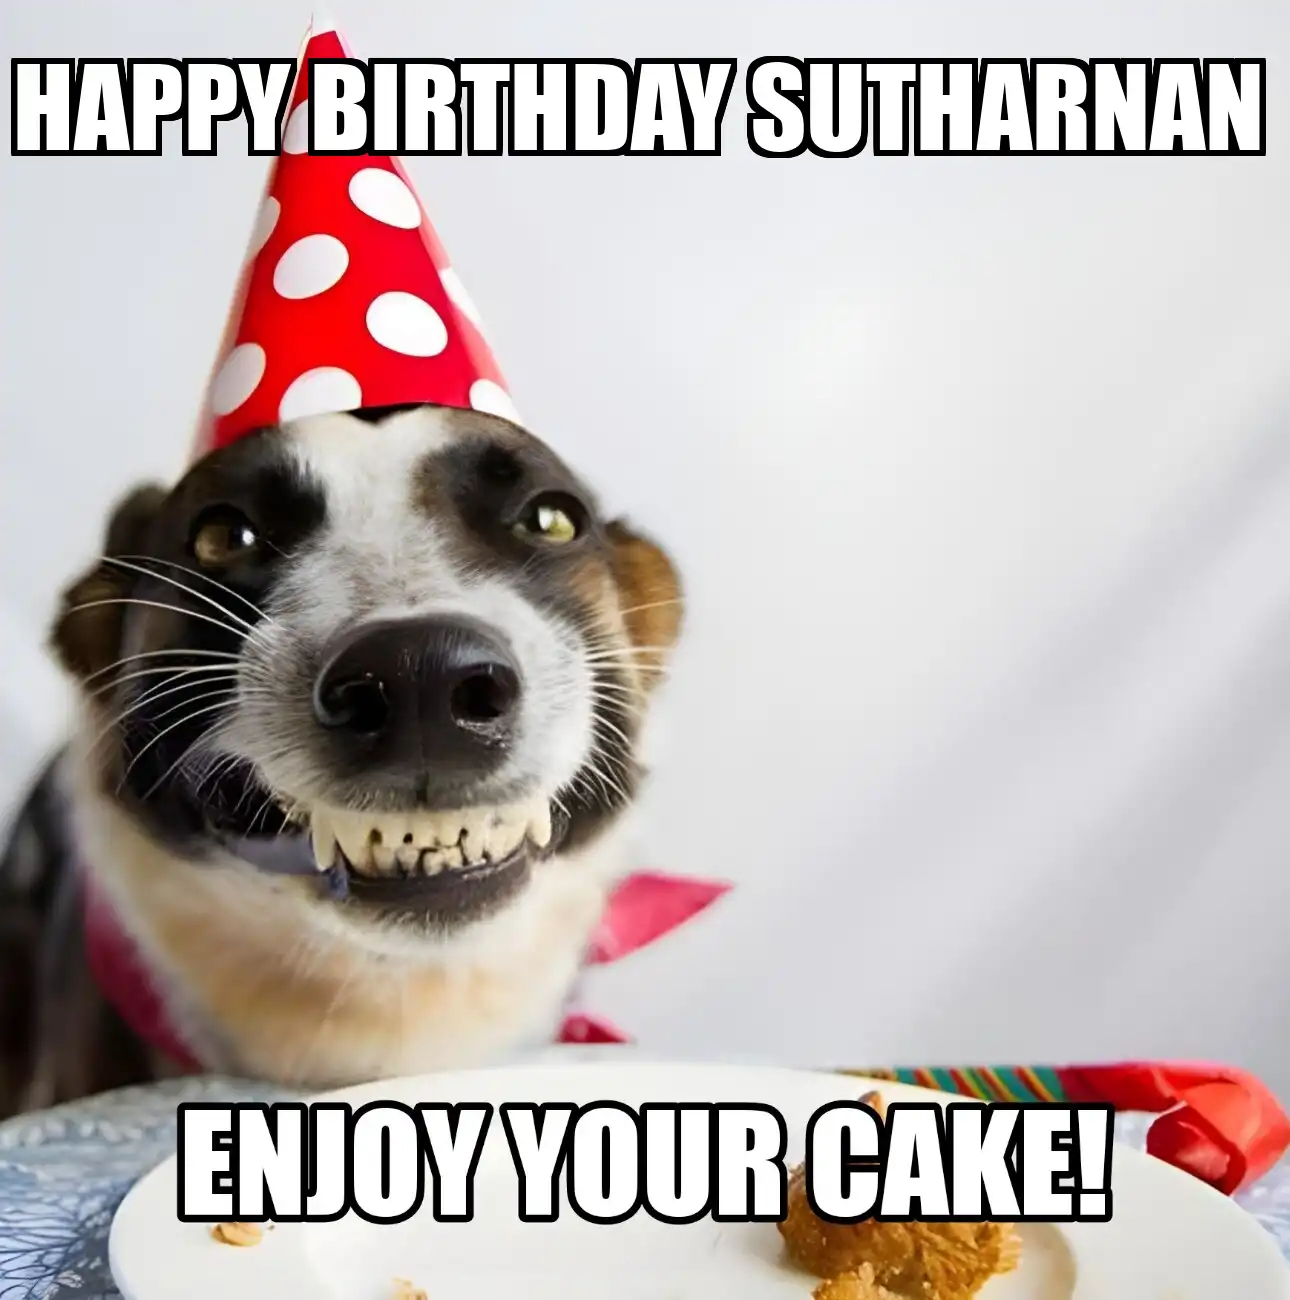 Happy Birthday Sutharnan Enjoy Your Cake Dog Meme